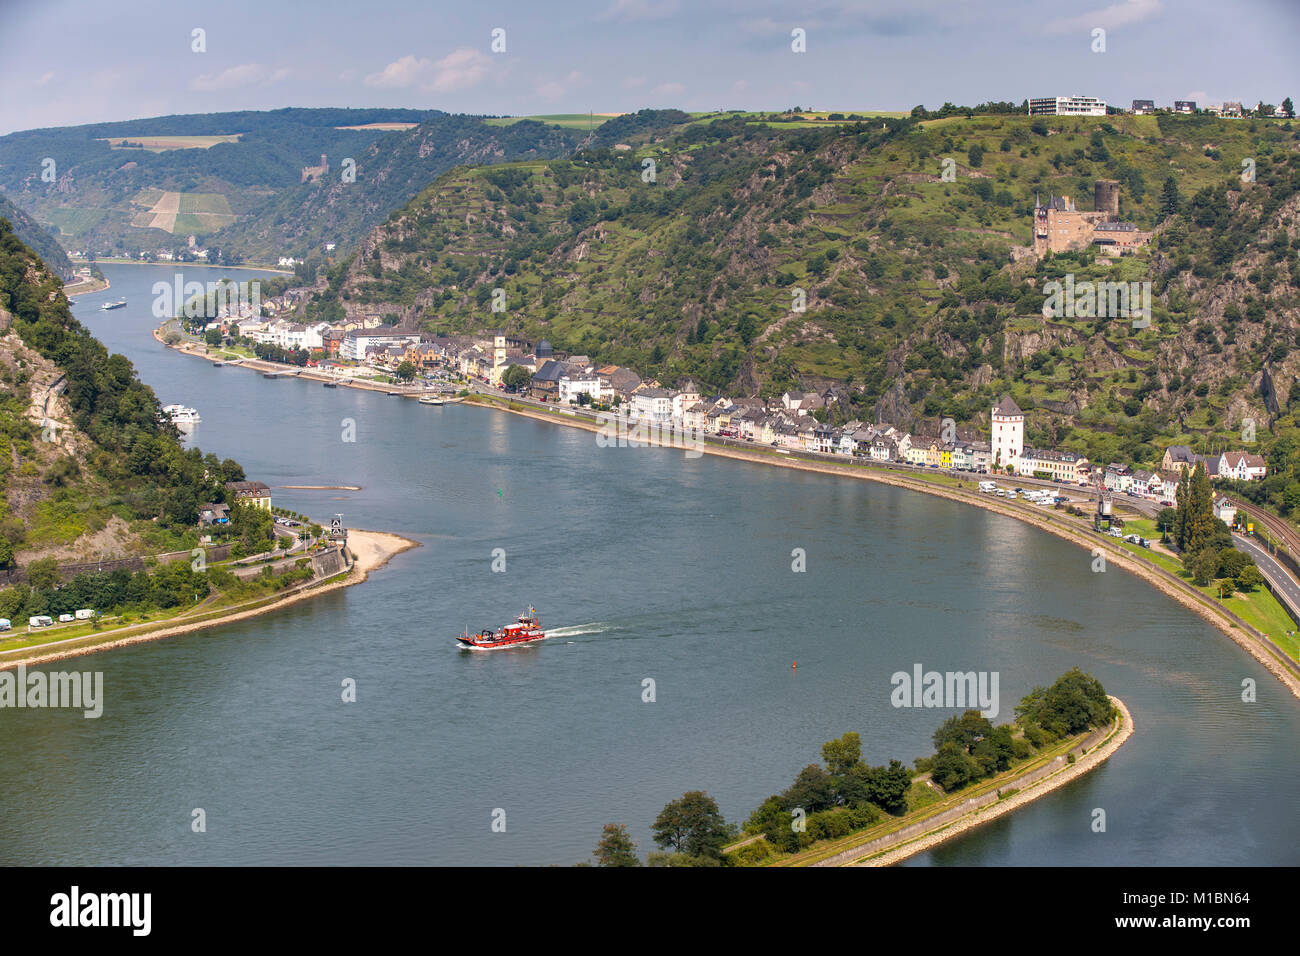 The Rhine, Upper Middle Rhine Valley, near St. Goar, Germany, Stock Photo